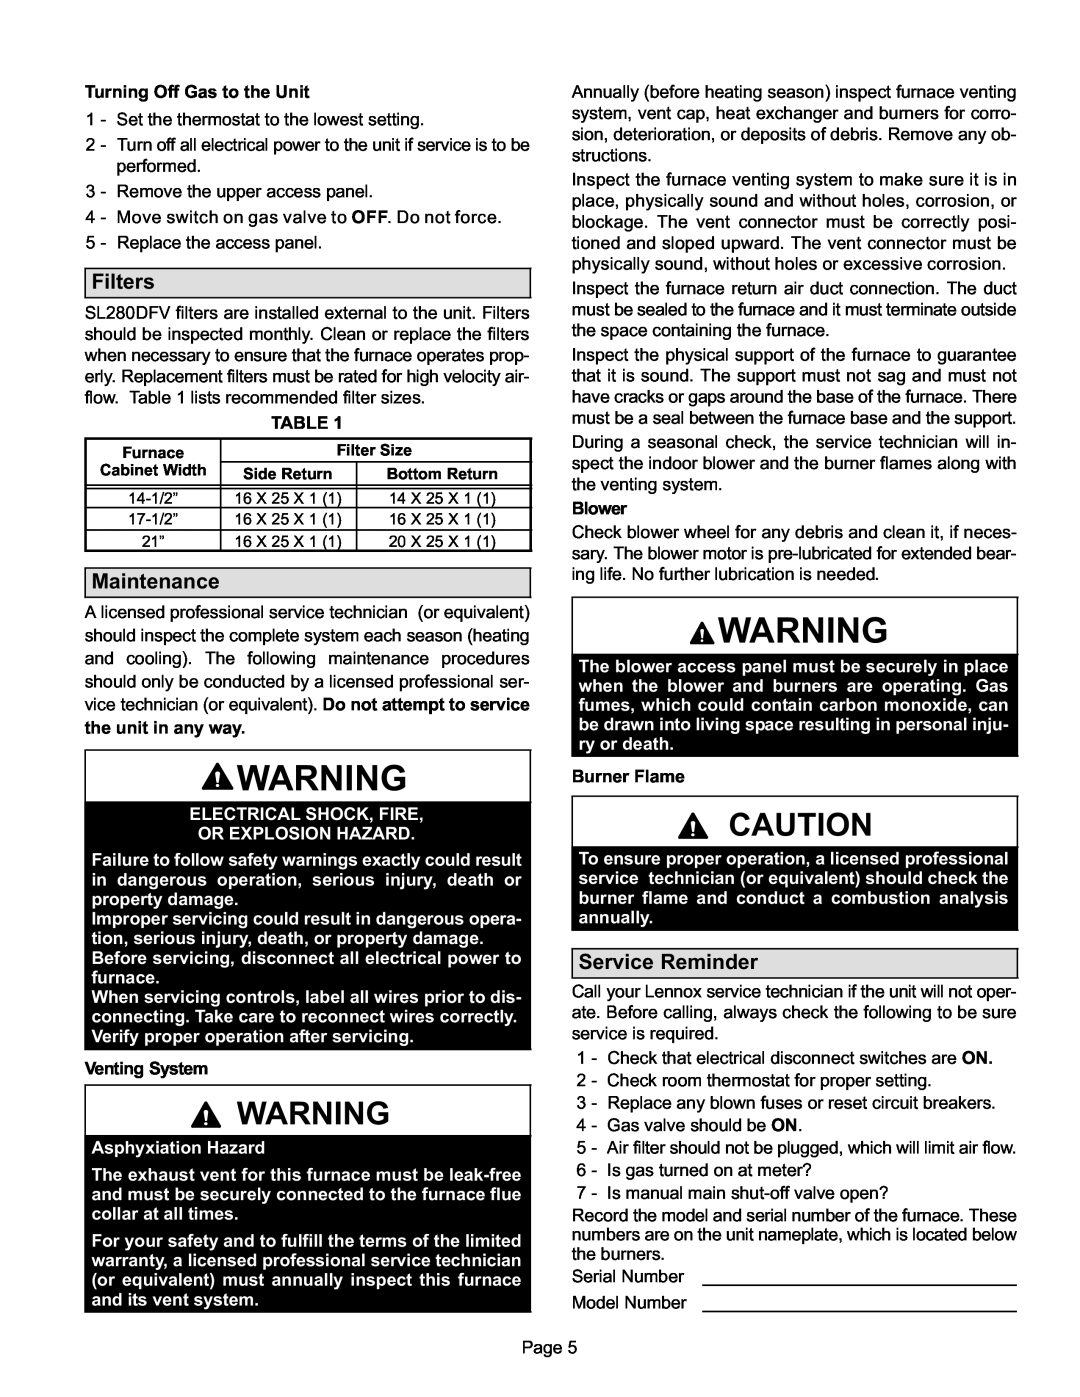 Lennox International Inc SL280DFV manual Filters, Maintenance, Service Reminder 